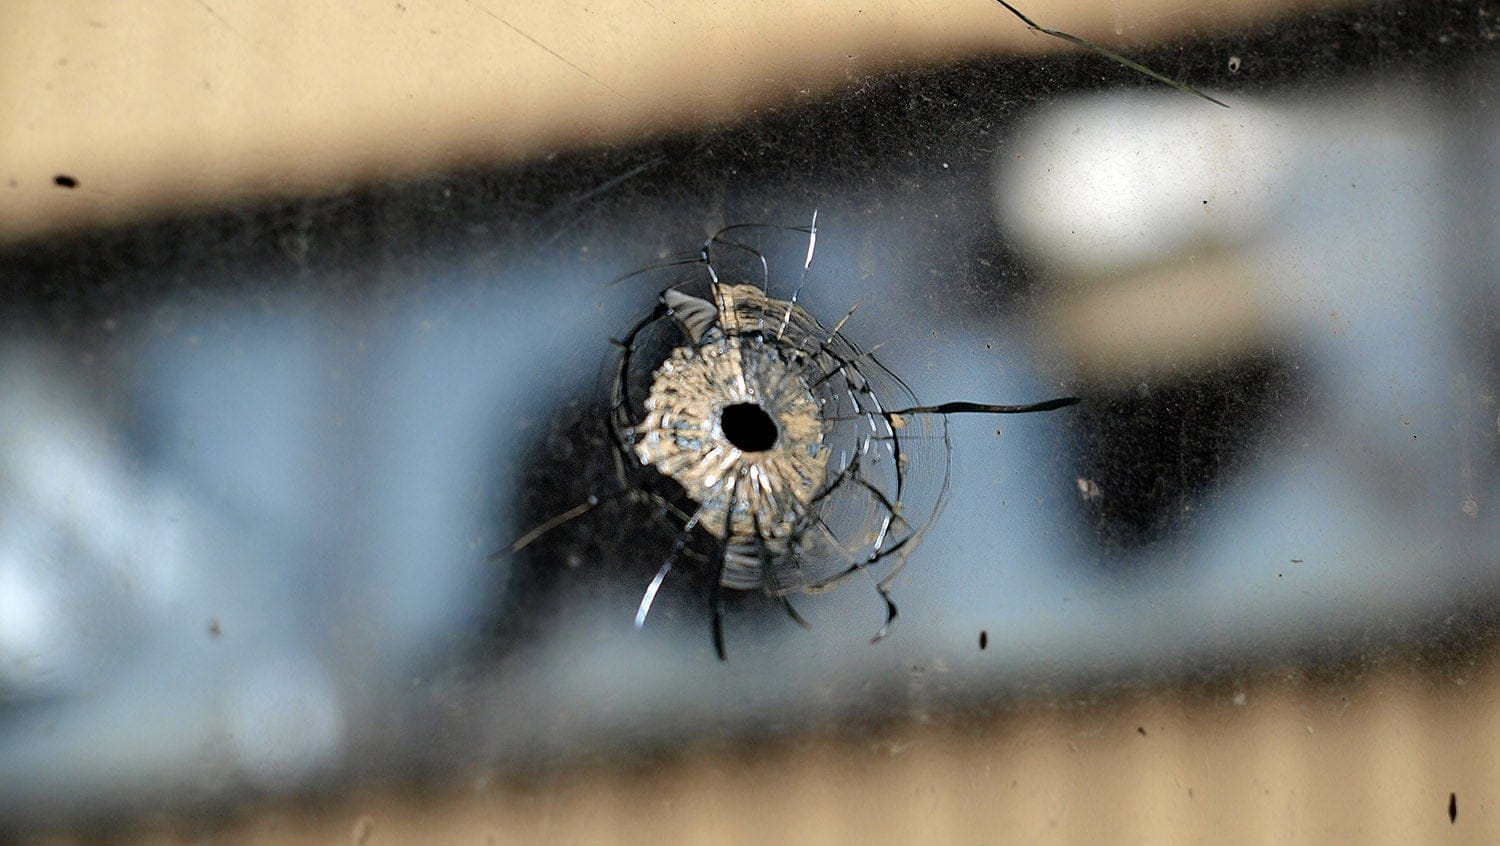 A gunshot hole in glass window